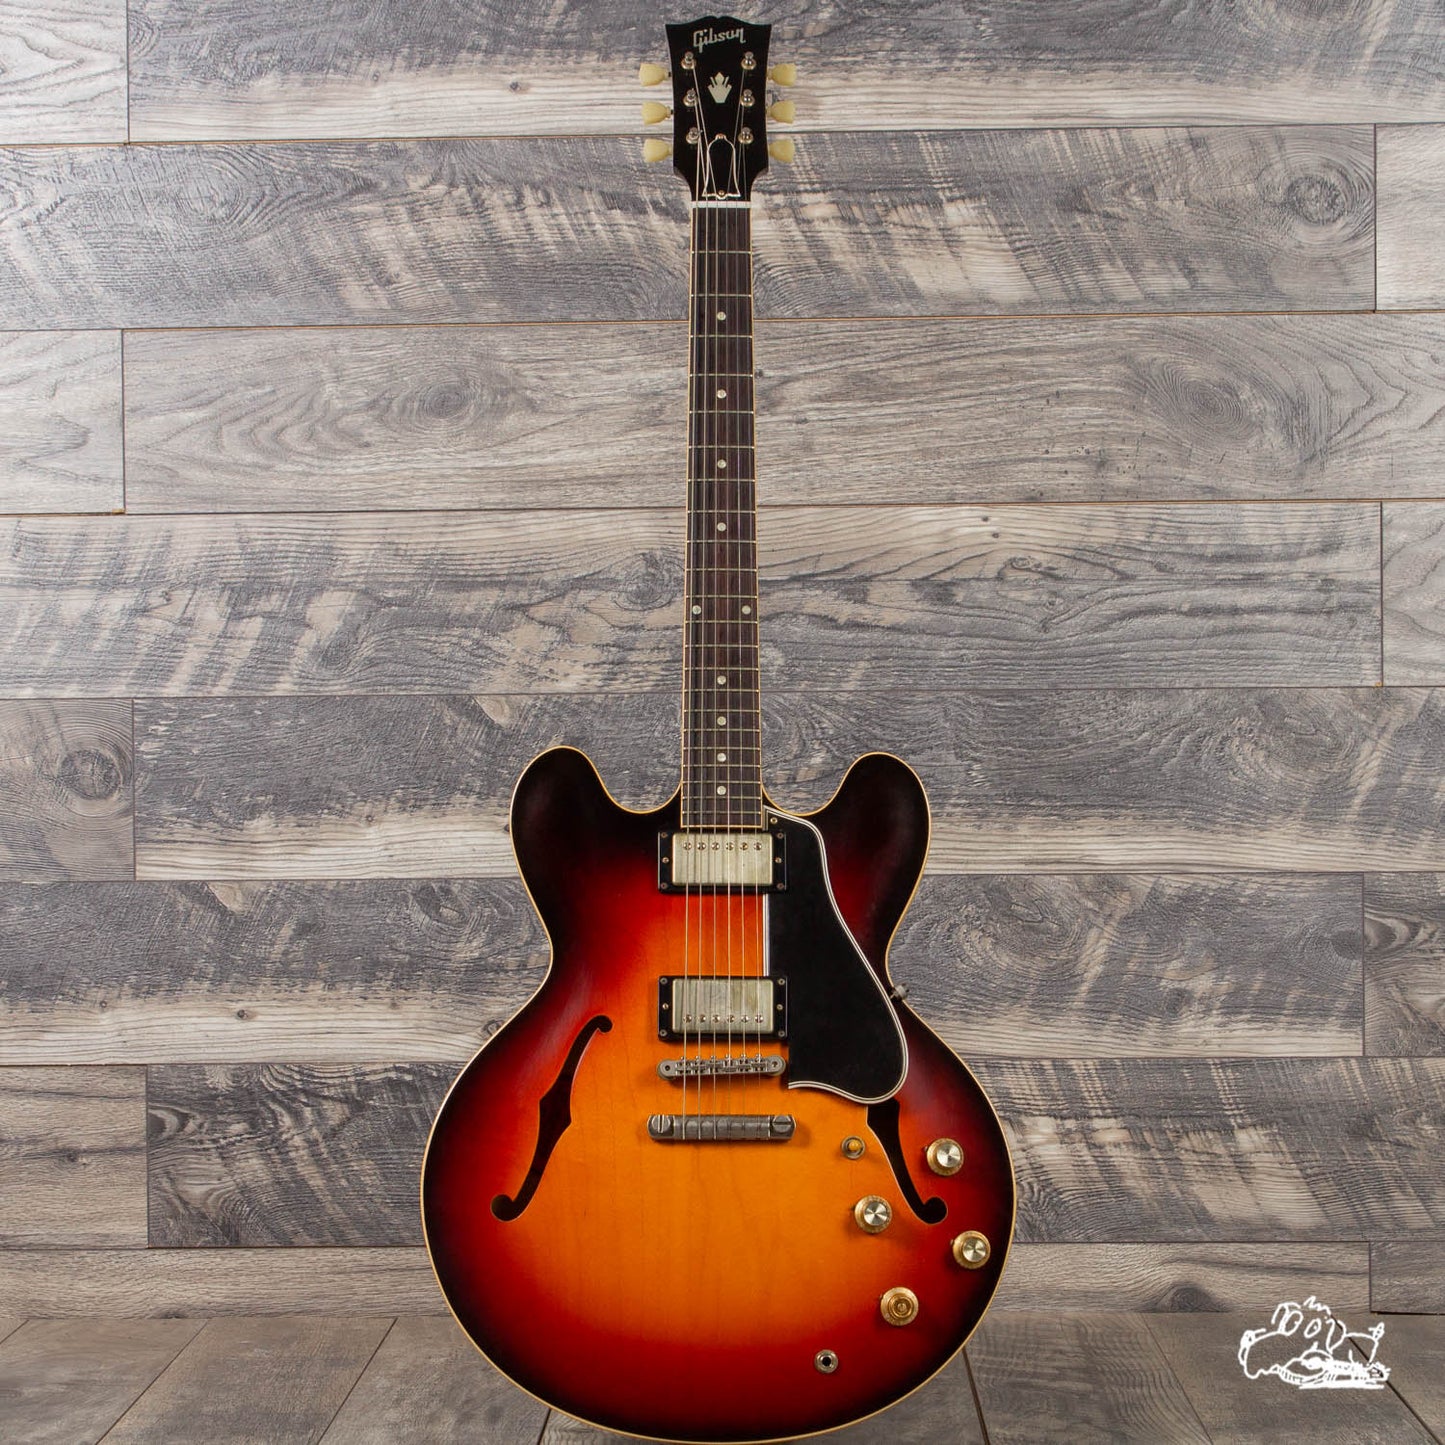 2012 Gibson CS Joe Bonamassa ES-335